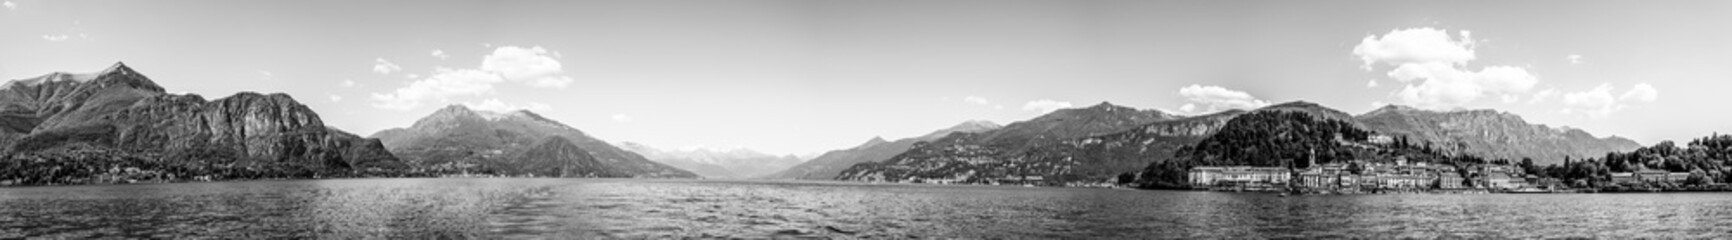 Panorama landscape of Bellagio village on the Italian Riviera of Lake Como in black and white